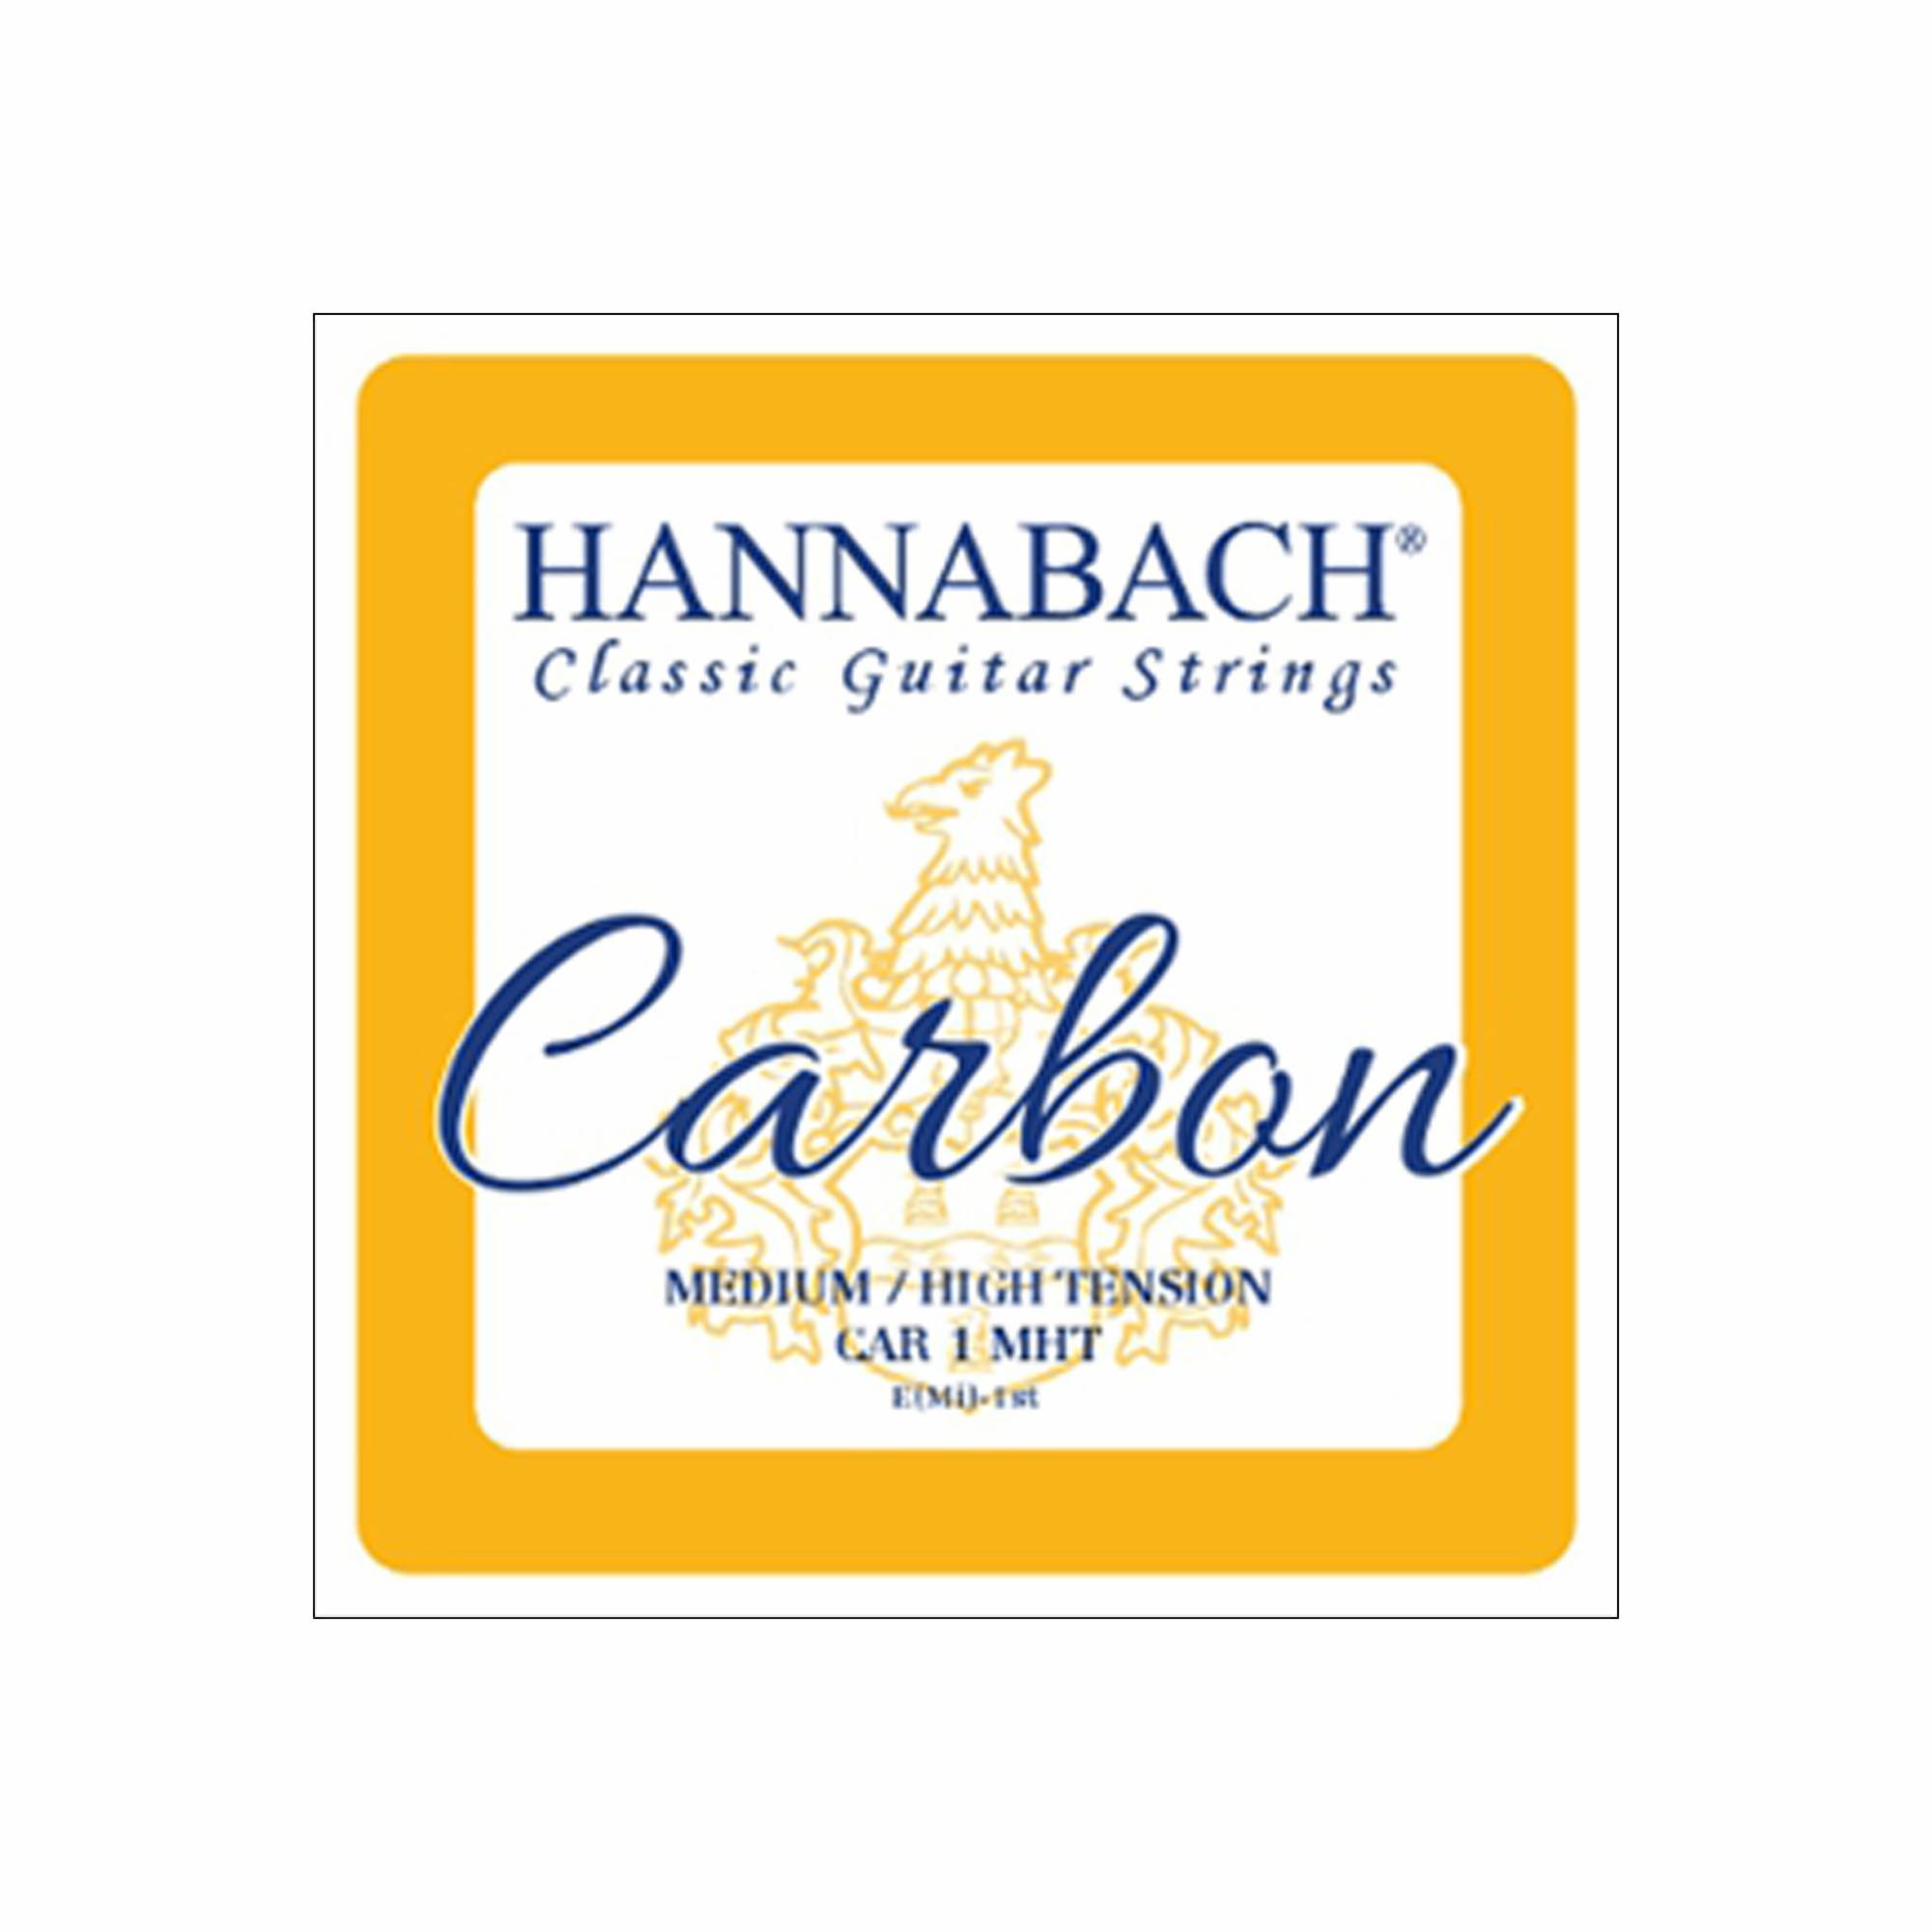 Hannabach Carbon Guitar Strings